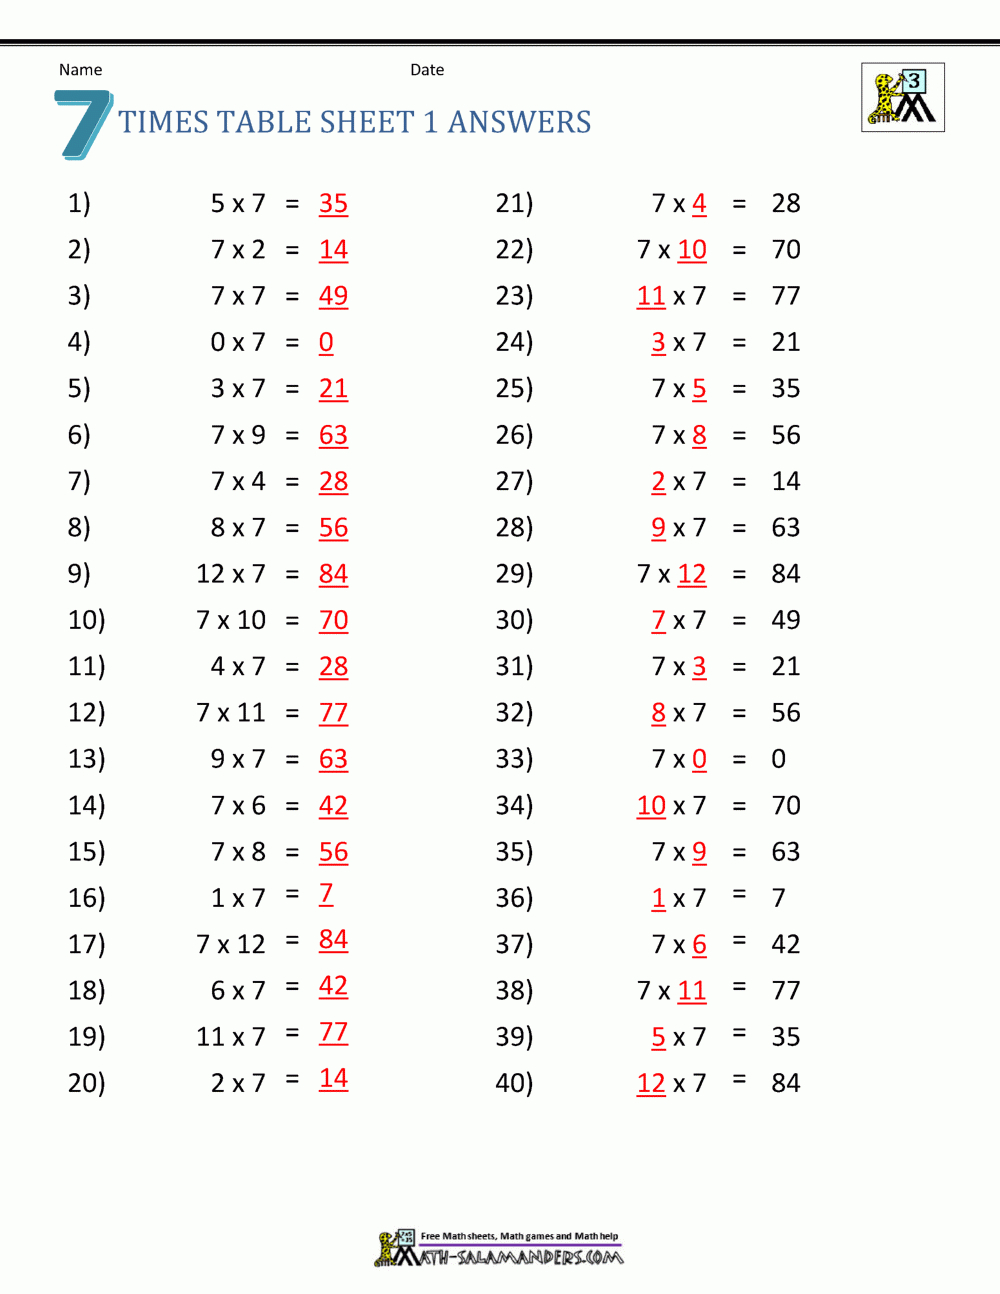 Multiplication Drill Sheets 3Rd Grade throughout Printable Multiplication Drills